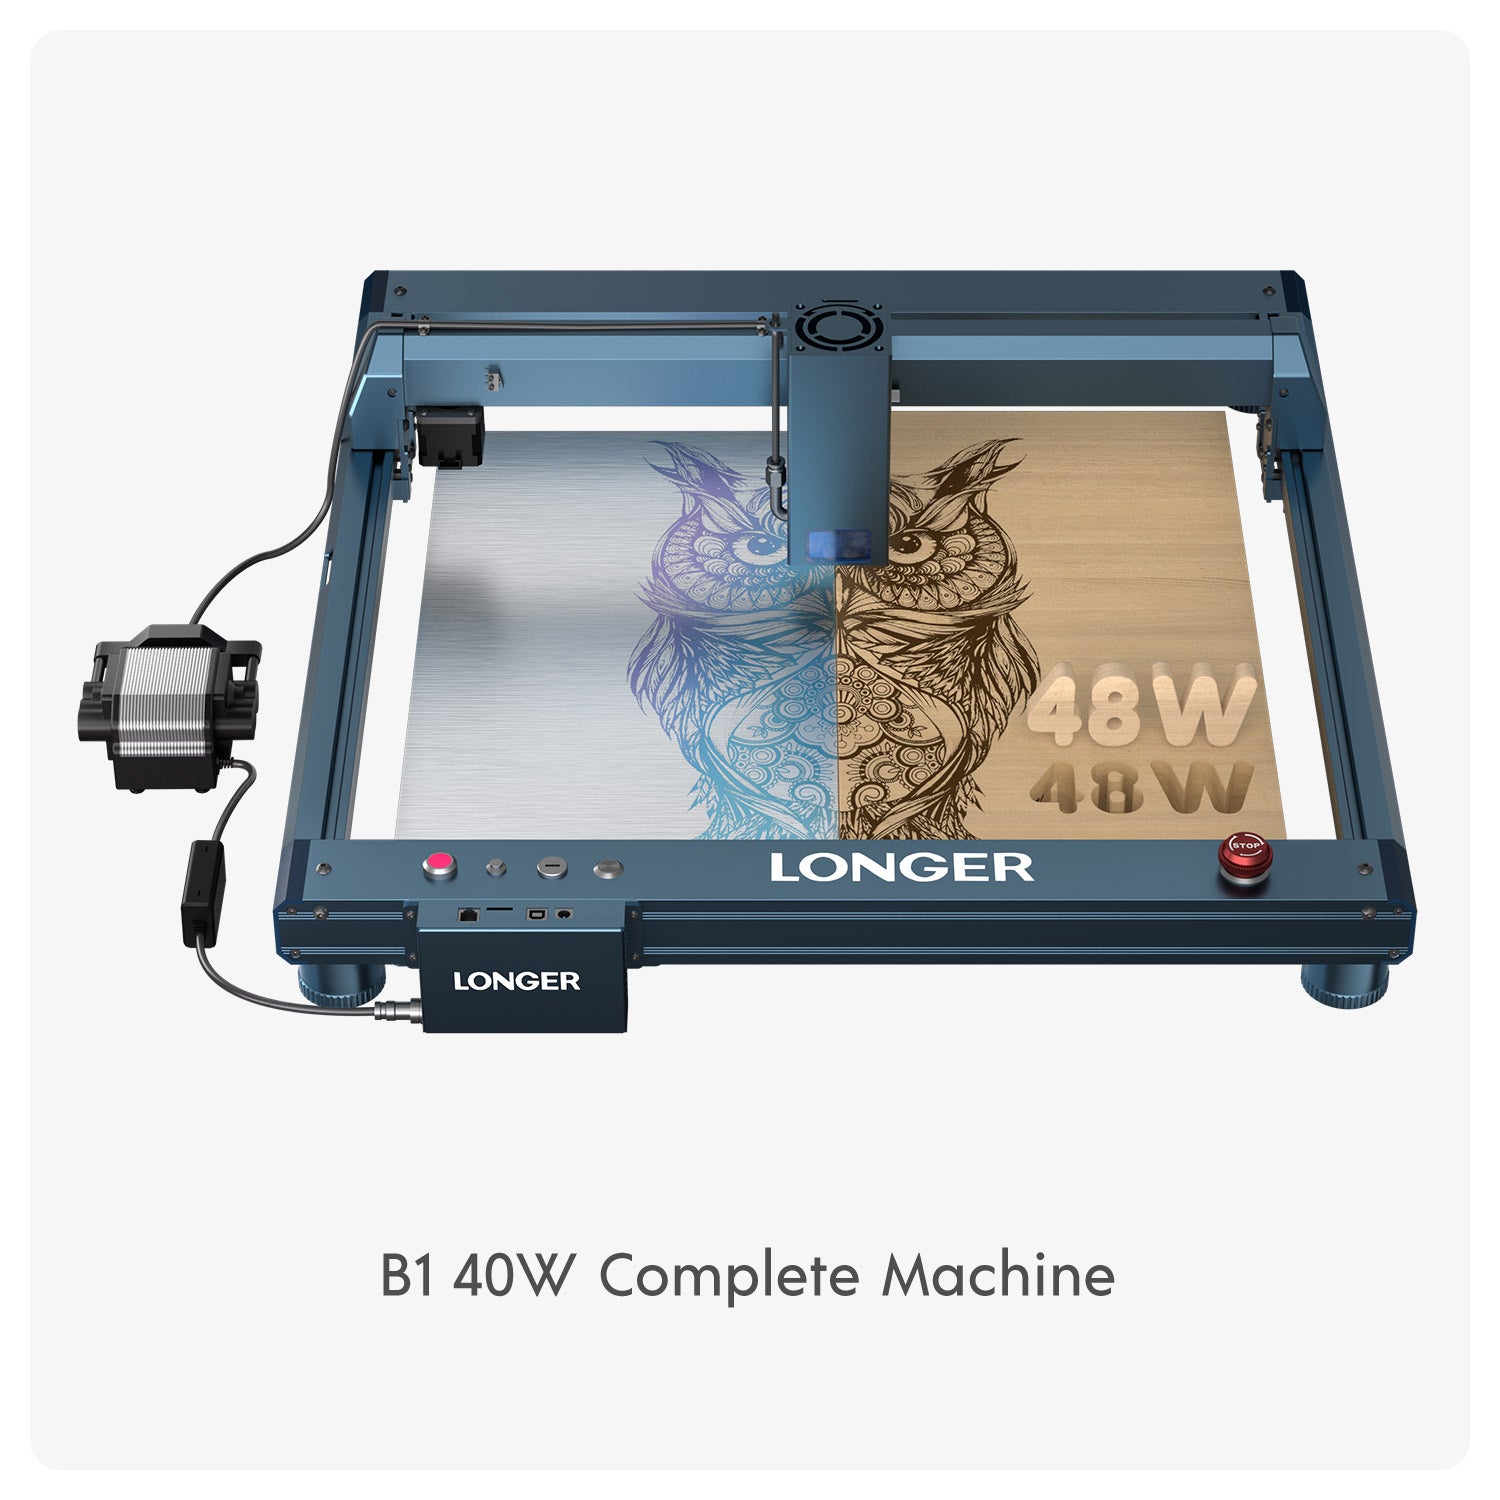 Longer Laser B1 40W Engraving Machine(44-48W Output Power)